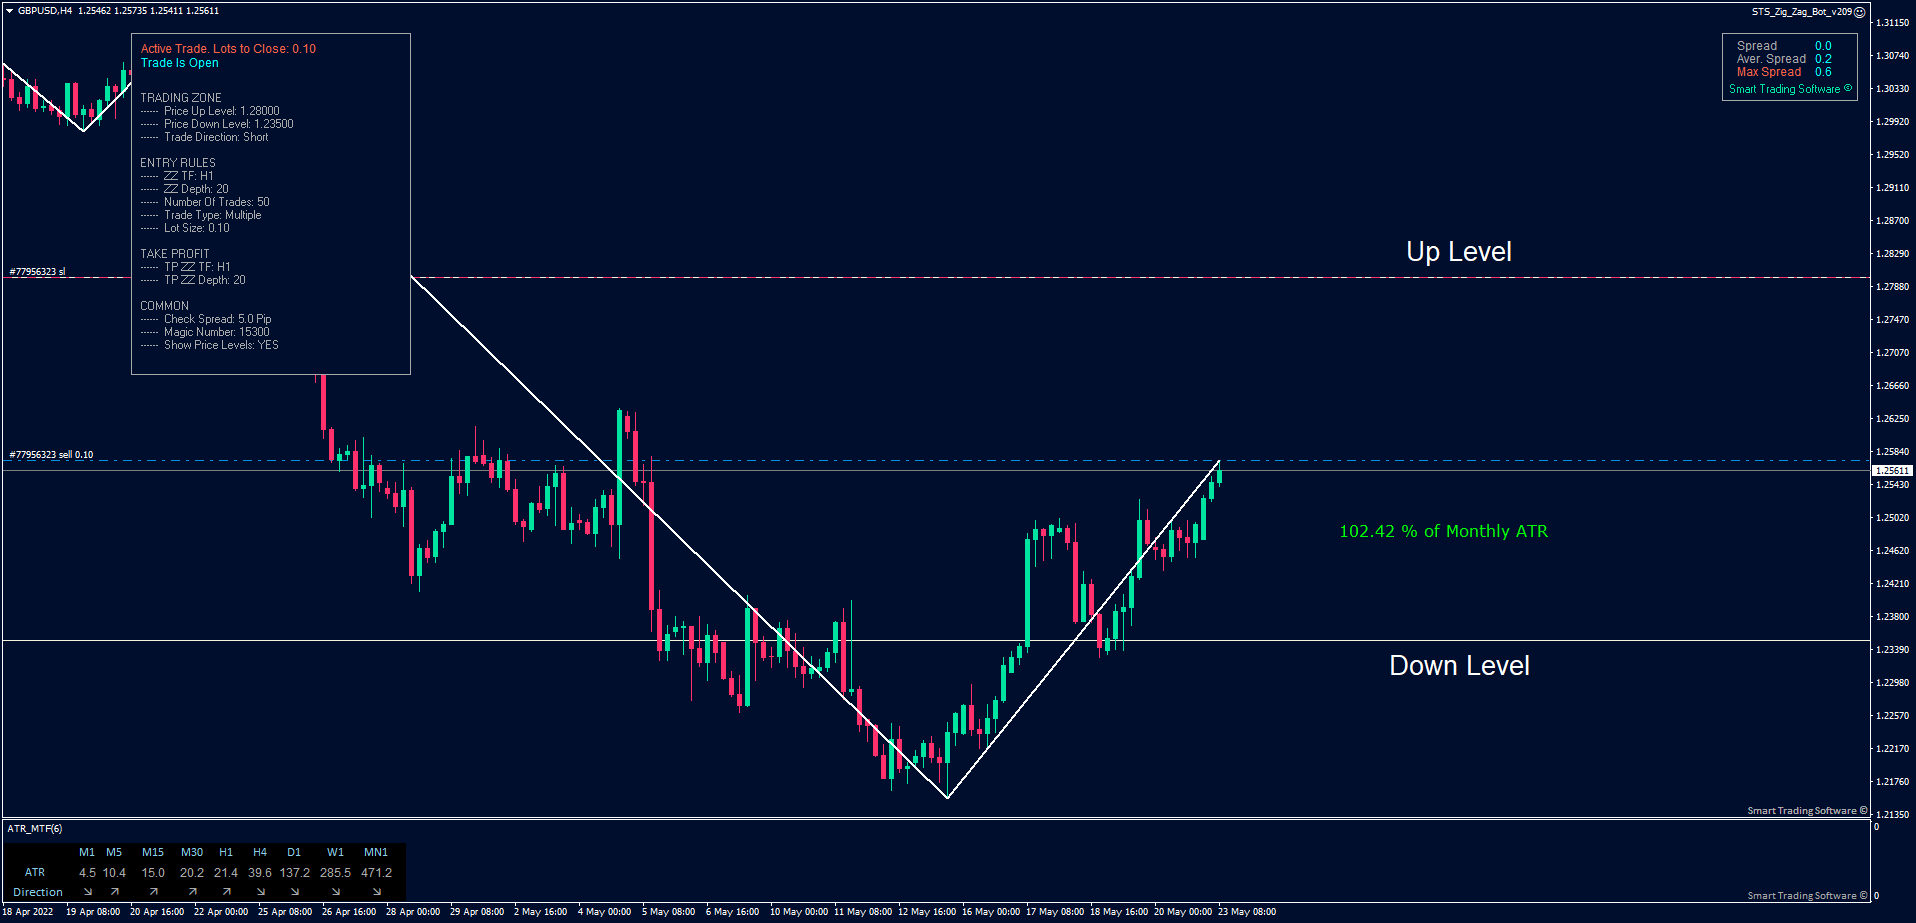 GBP/USD H4 chart